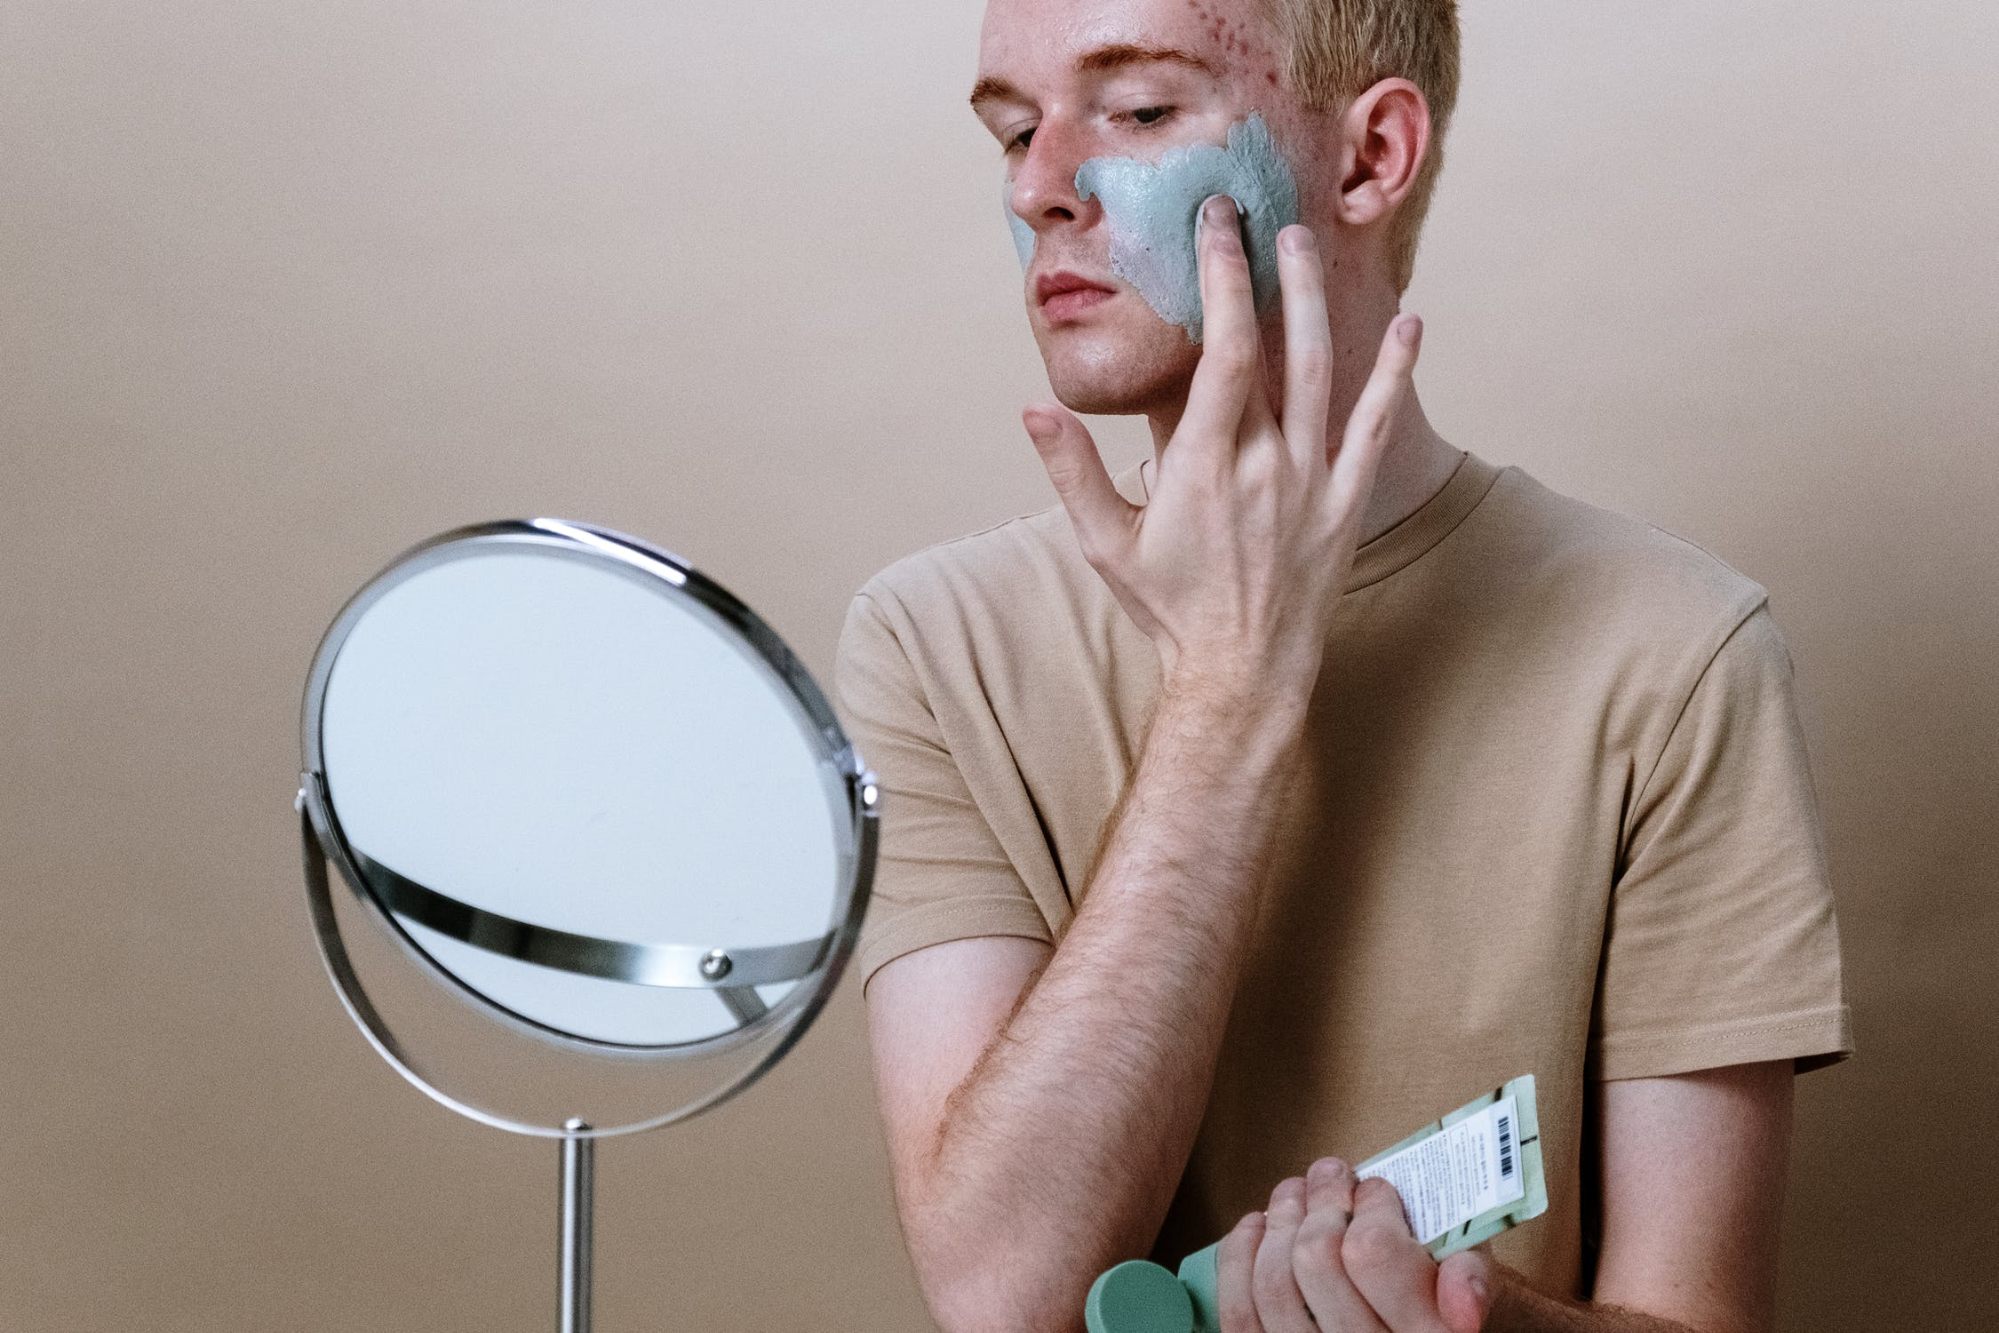 diabetic demopathy redhead man putting on face mask skincare